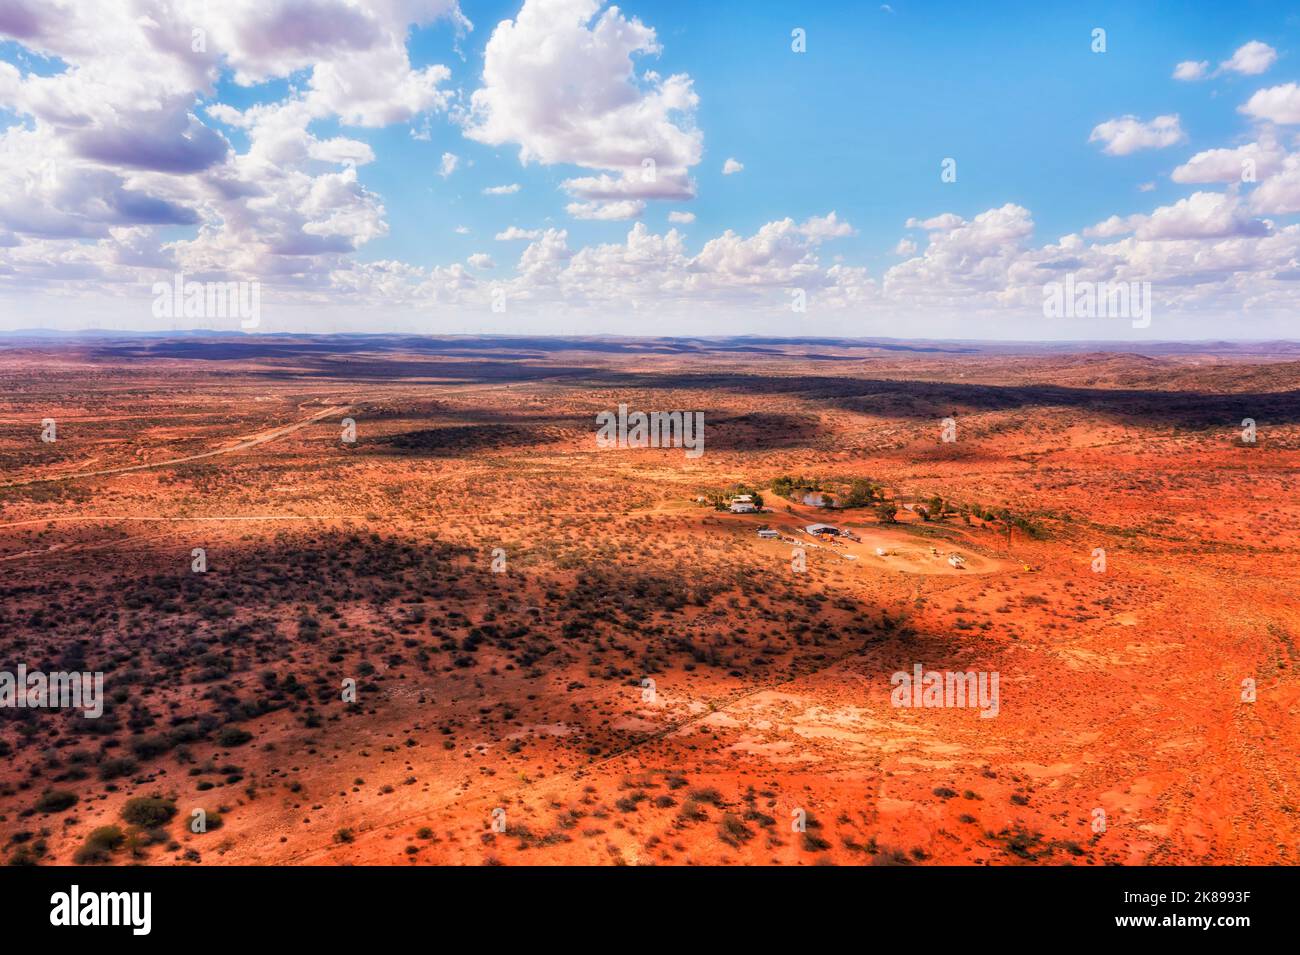 Remote homestead farm in red soil Australian outback near Broken hill city - aerial landscape to Silverton. Stock Photo